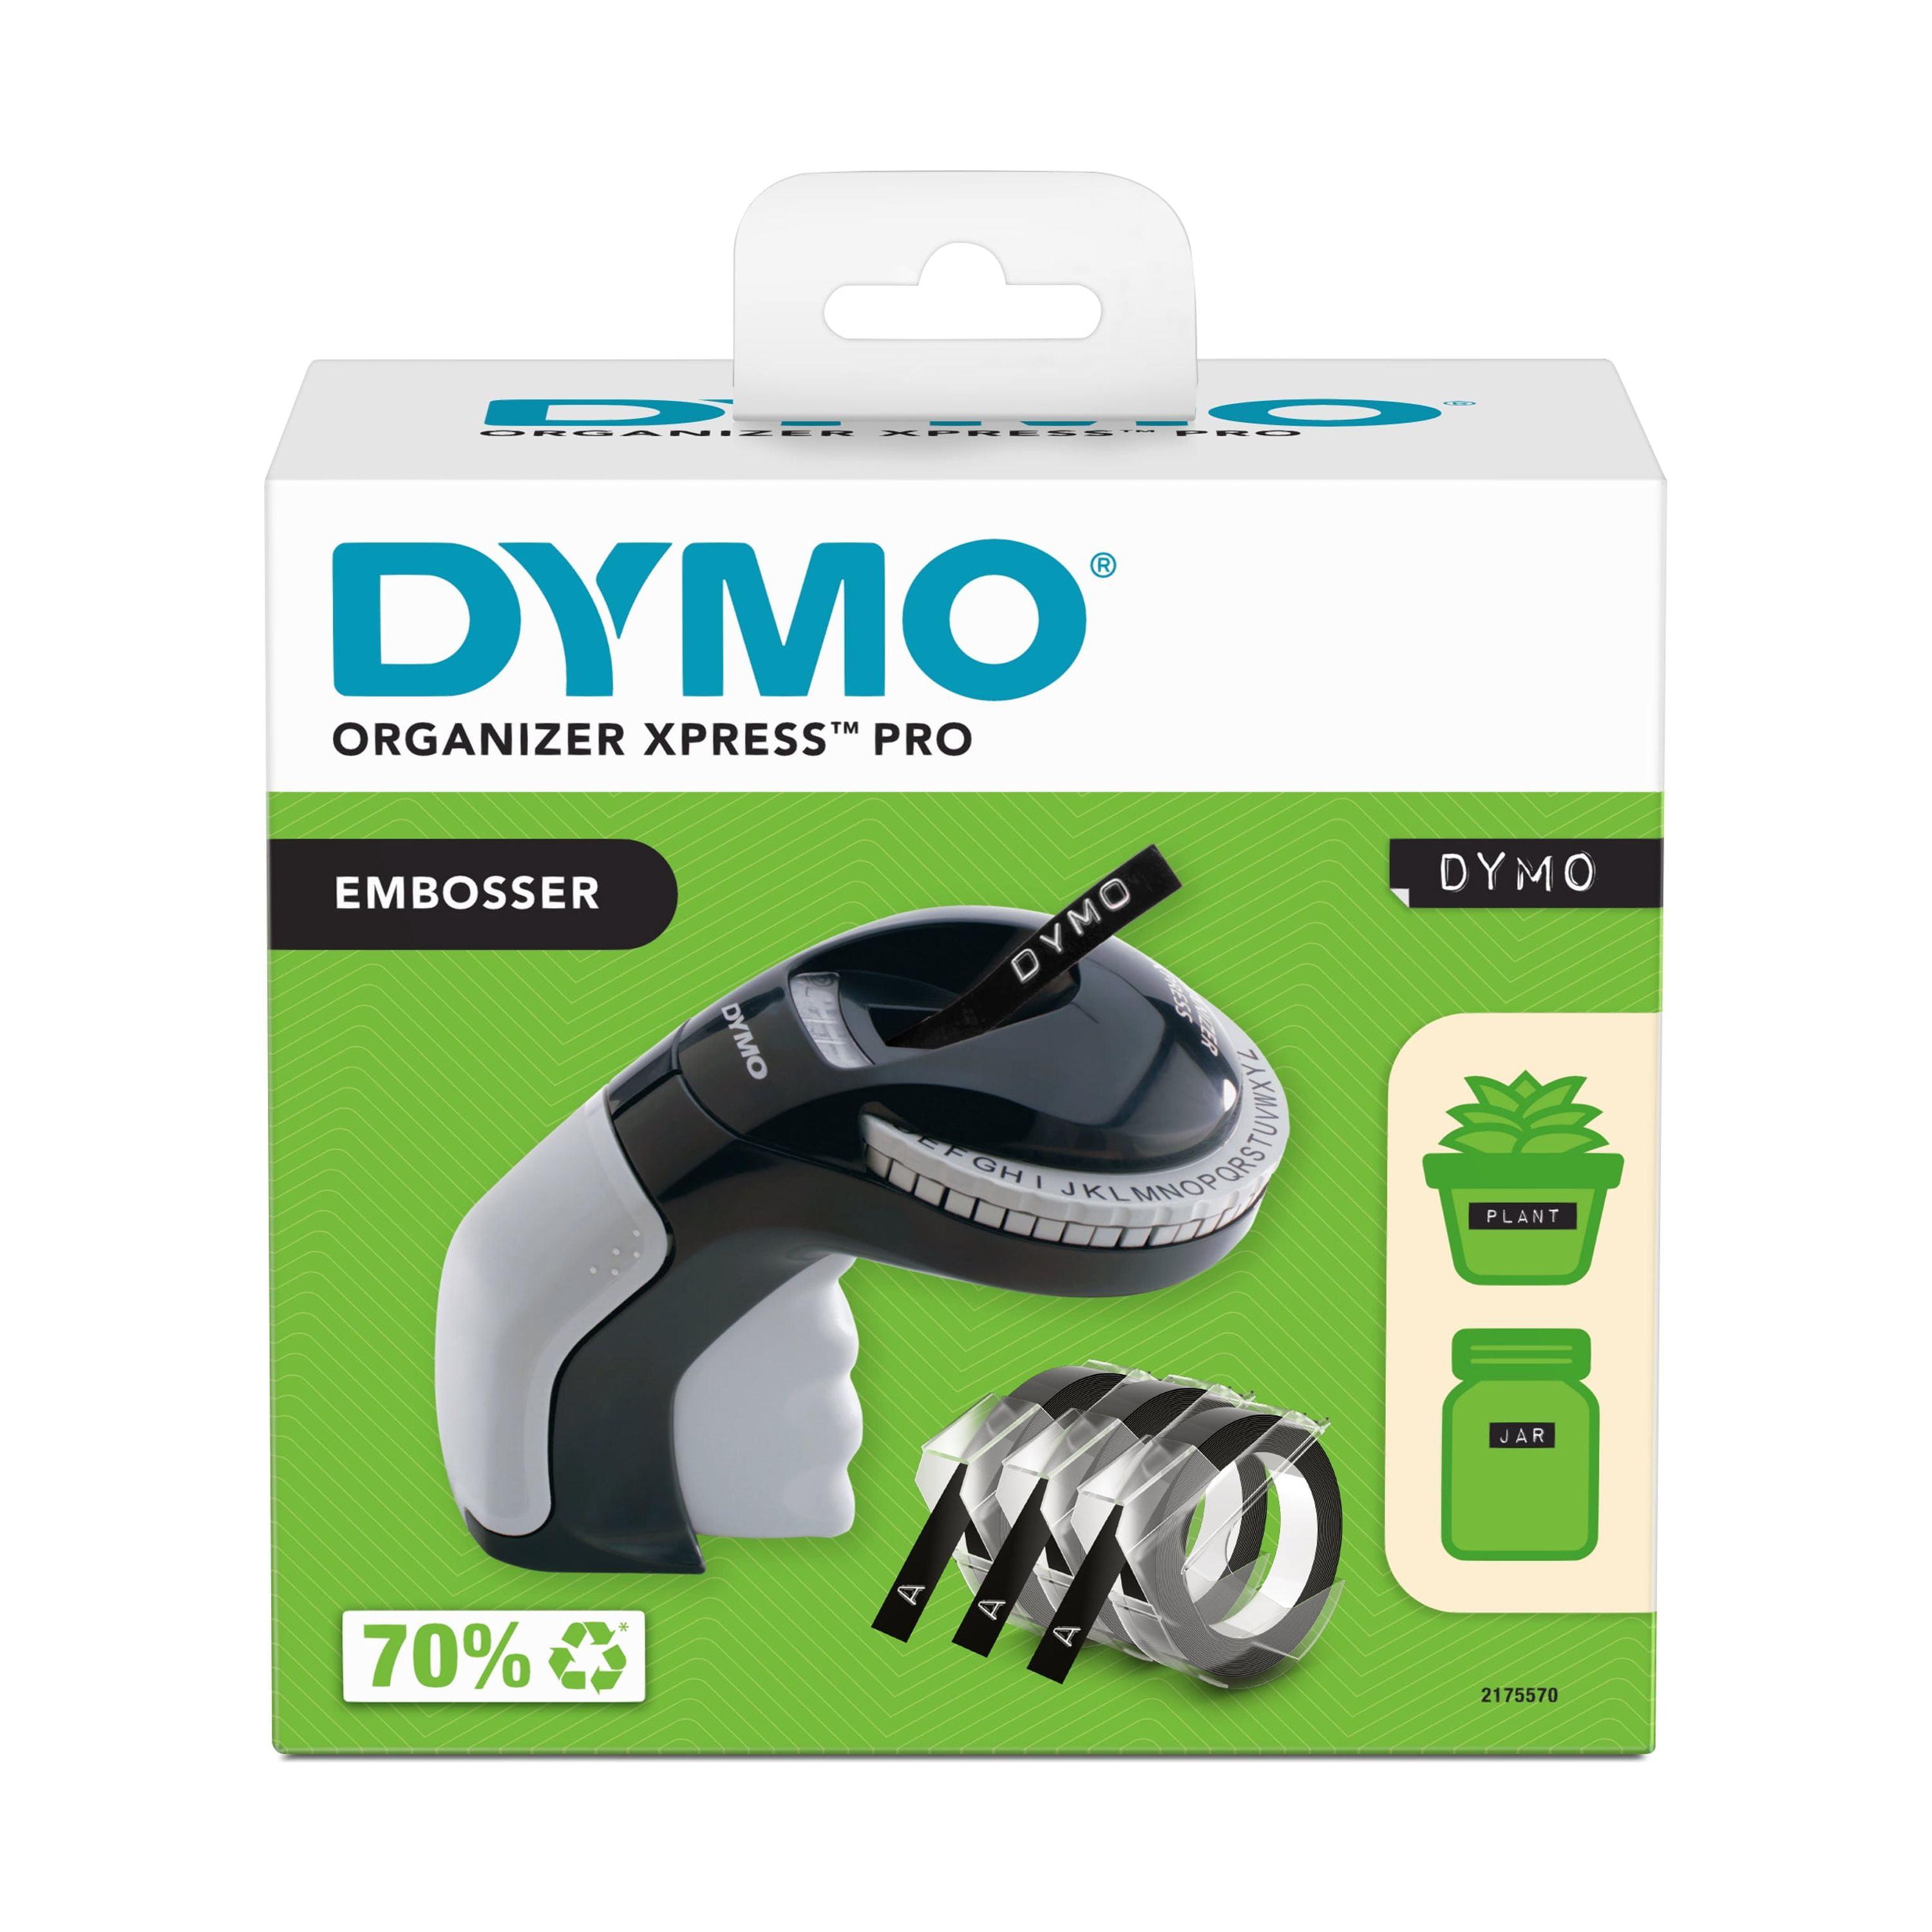 Dymo Organizer Express Pro Embossing Label Maker Kit